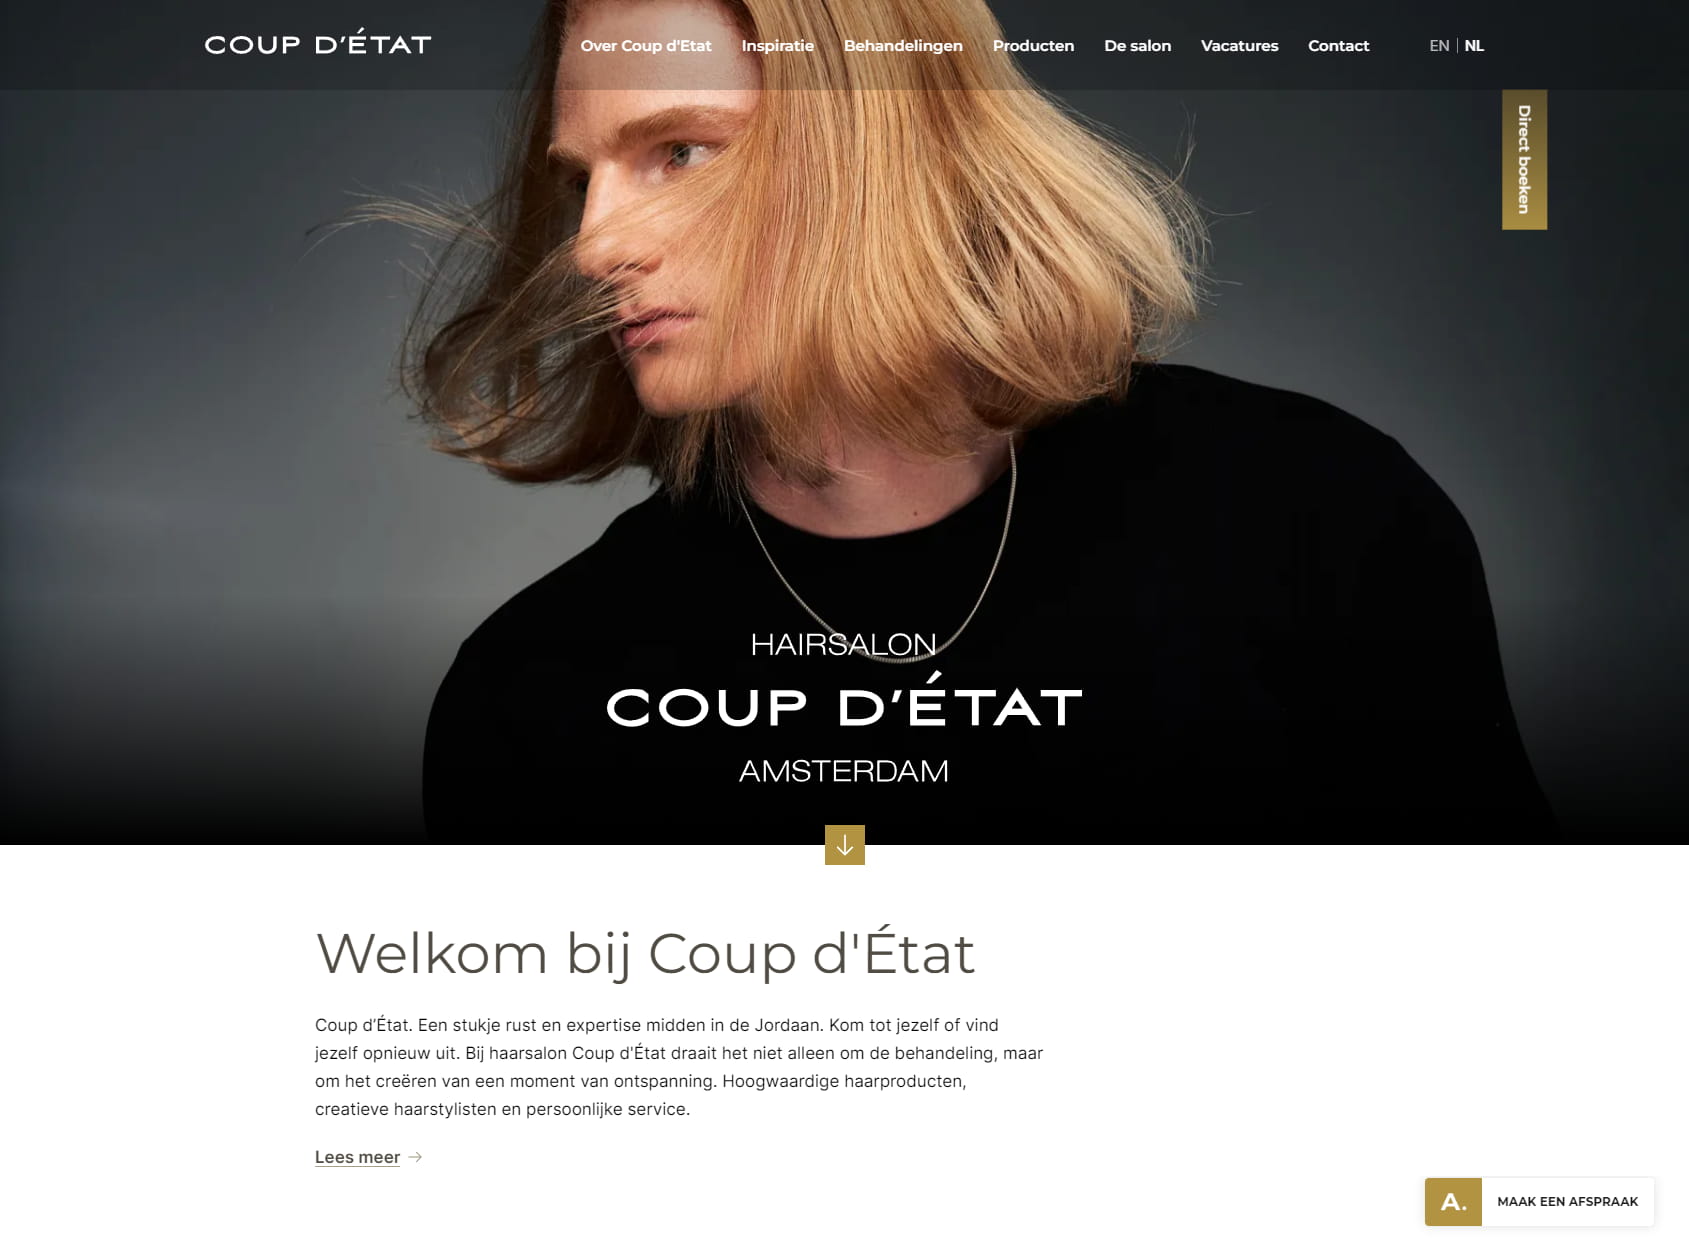 Hairsalon Coup D’Etat Amsterdam